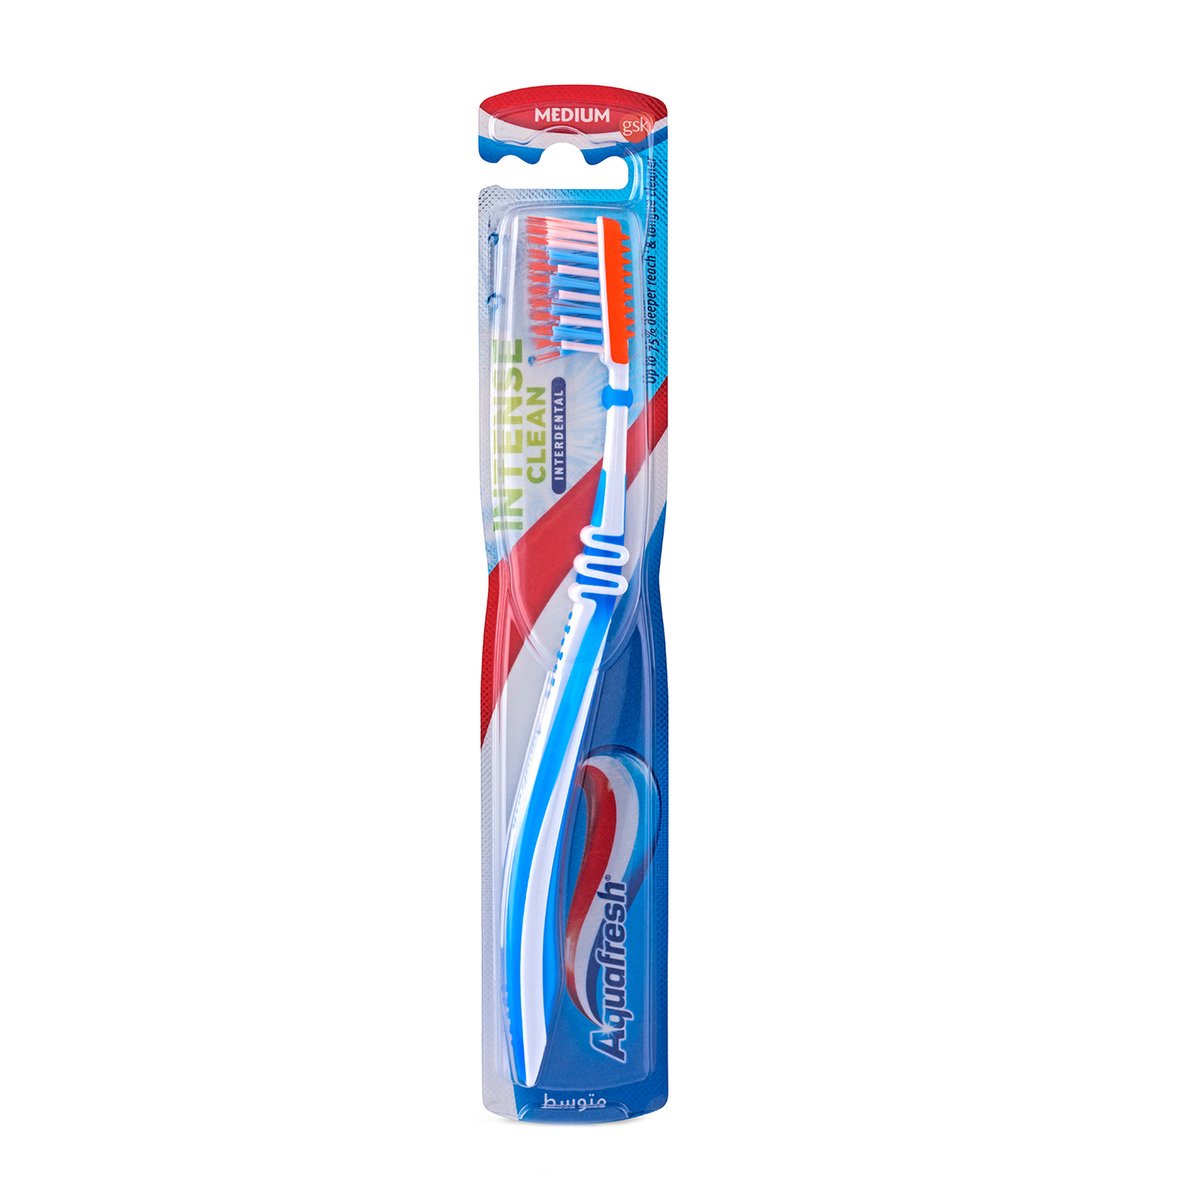 Aquafresh Intense Clean Interdental Toothbrush Medium Assorted Color 1 pc